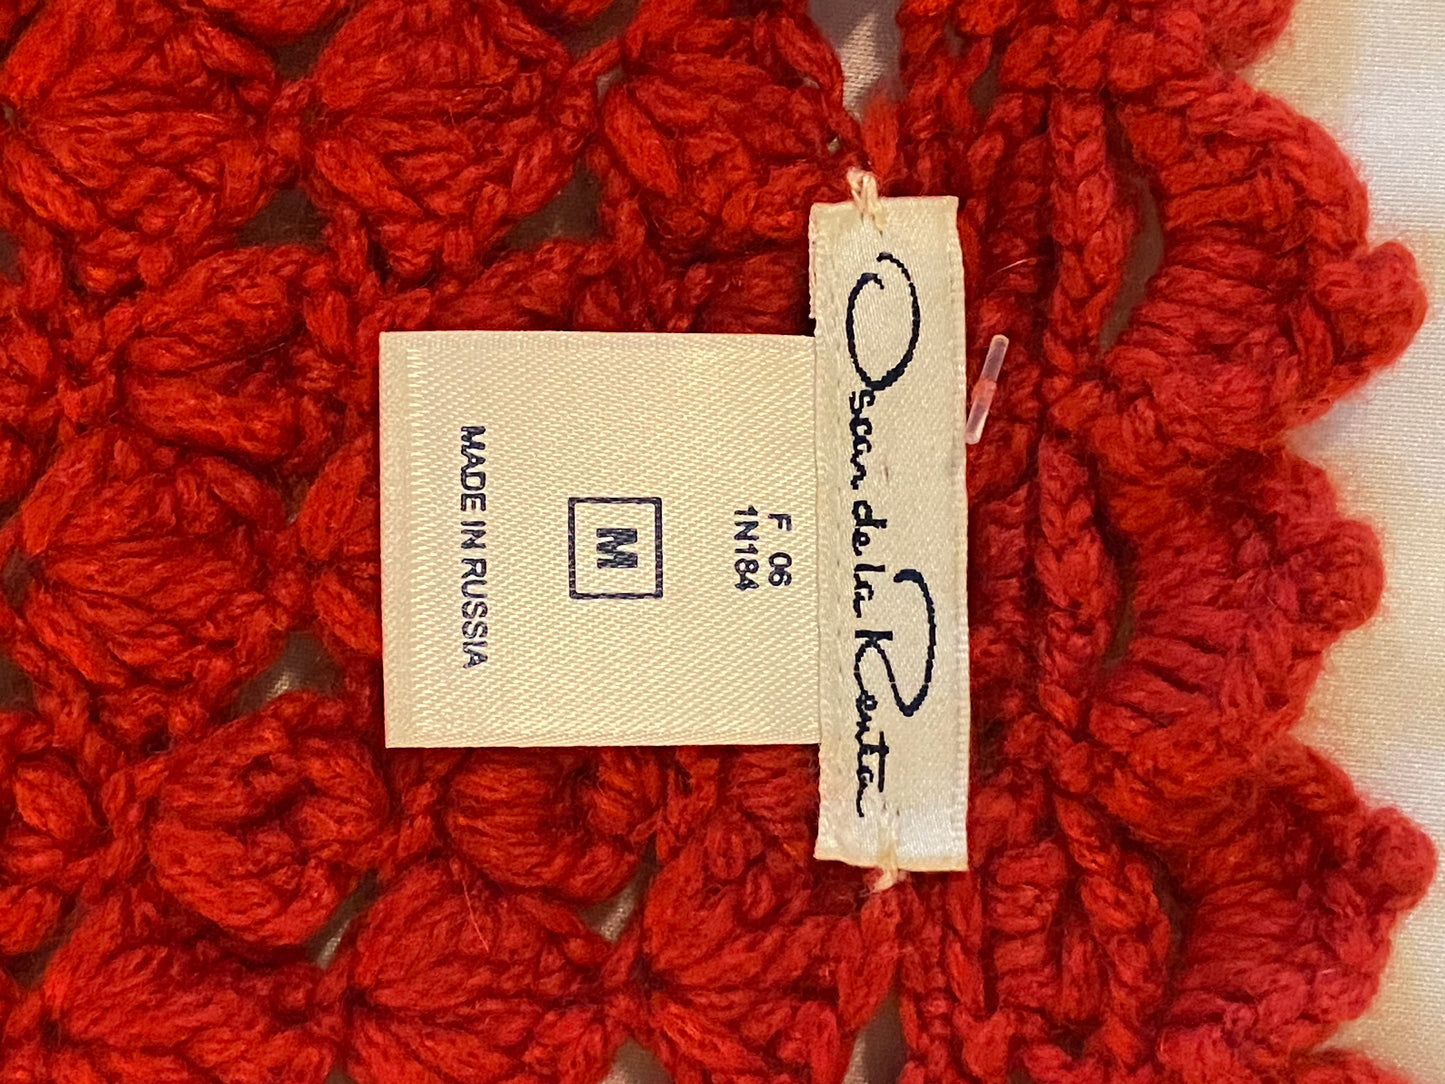 Oscar De La Renta Red Ornate Knit Sweater ABBY ESSIE Designer & Vintage